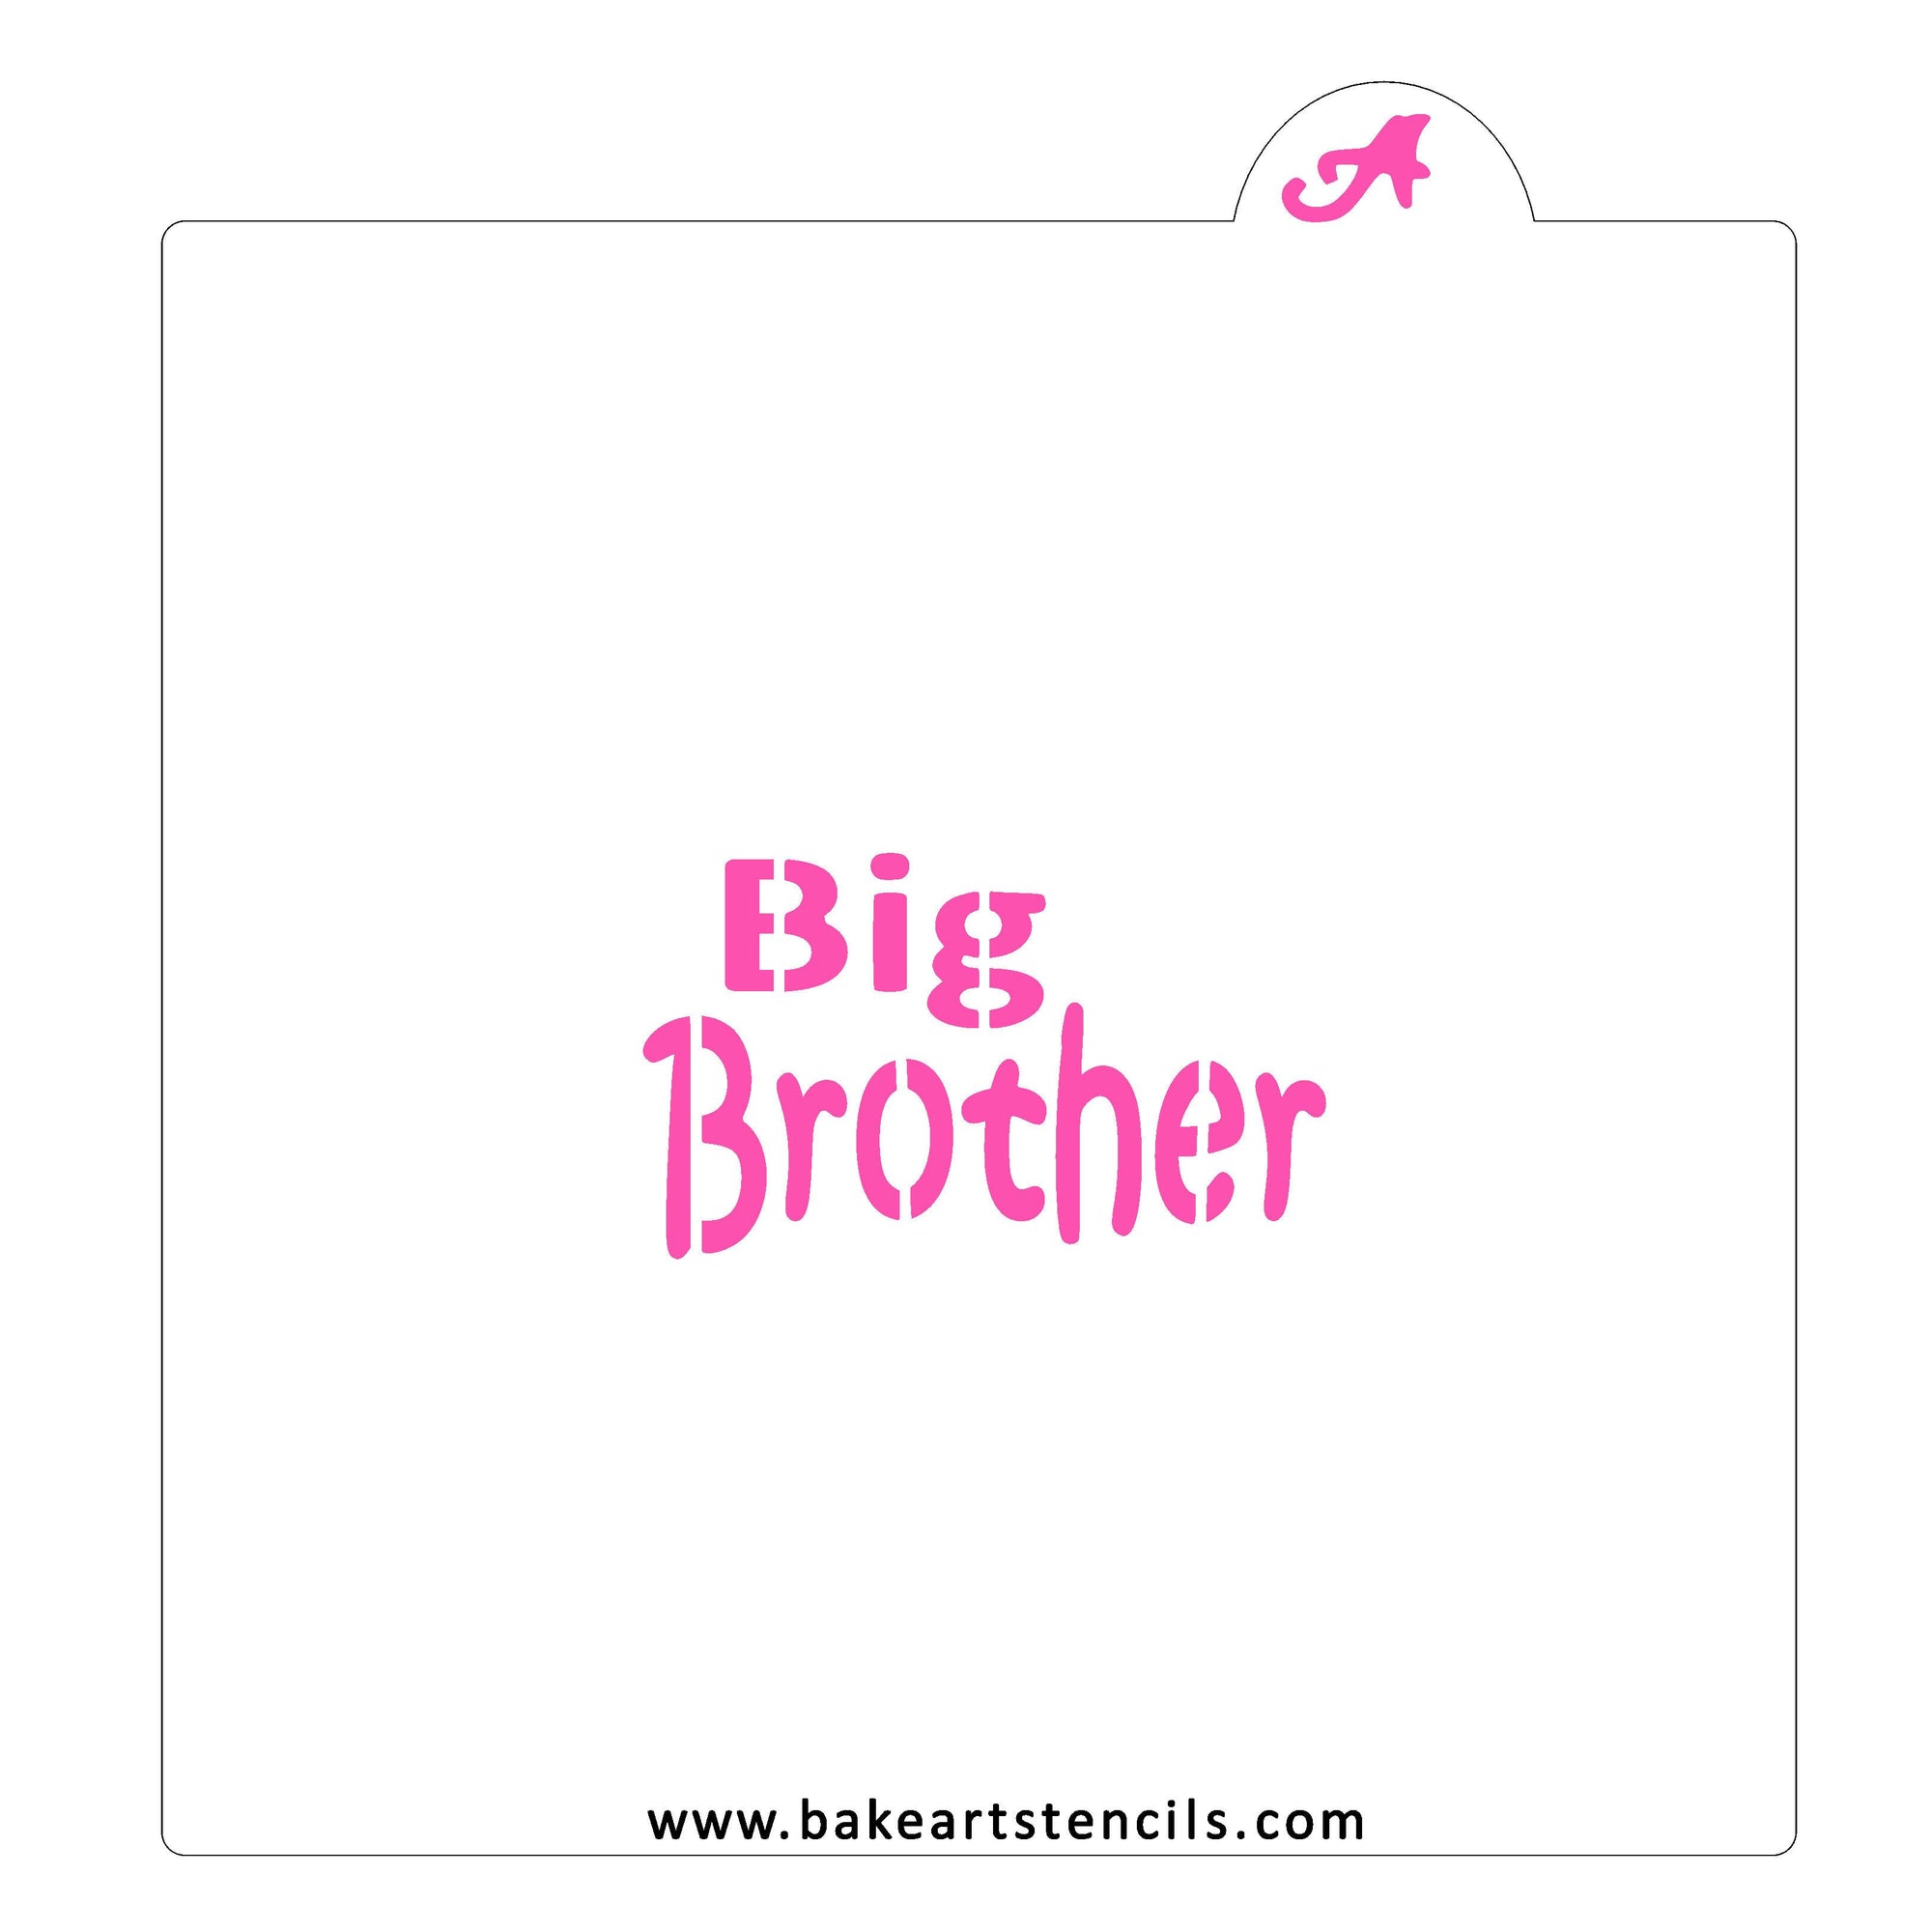 Big Brother Cookie Stencil bakeartstencil